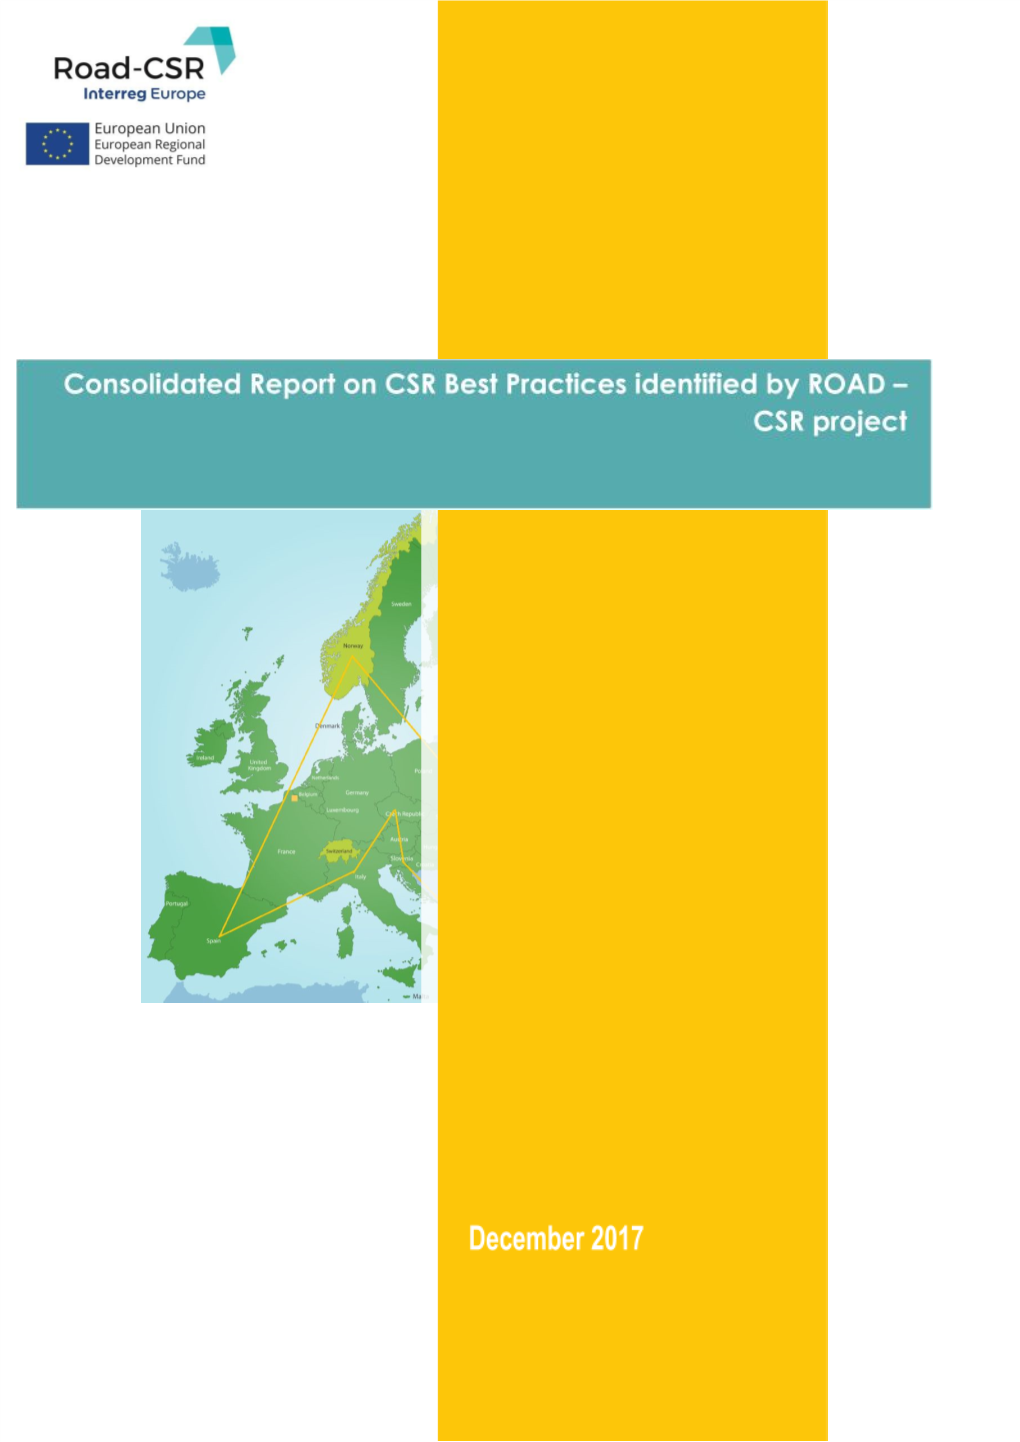 Report on the CSR Best Practices